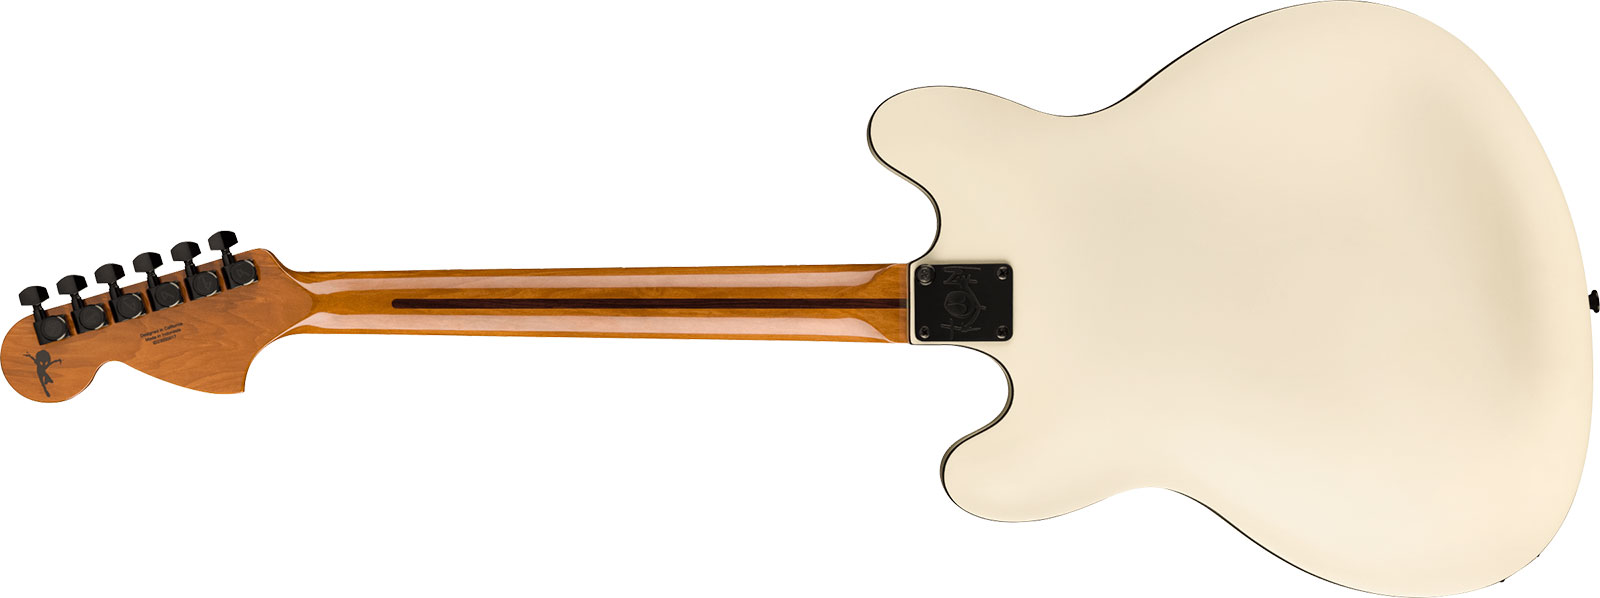 Fender Tom Delonge Starcaster Signature 1h Seymour Duncan Ht Rw - Satin Olympic White - Guitarra eléctrica semi caja - Variation 1